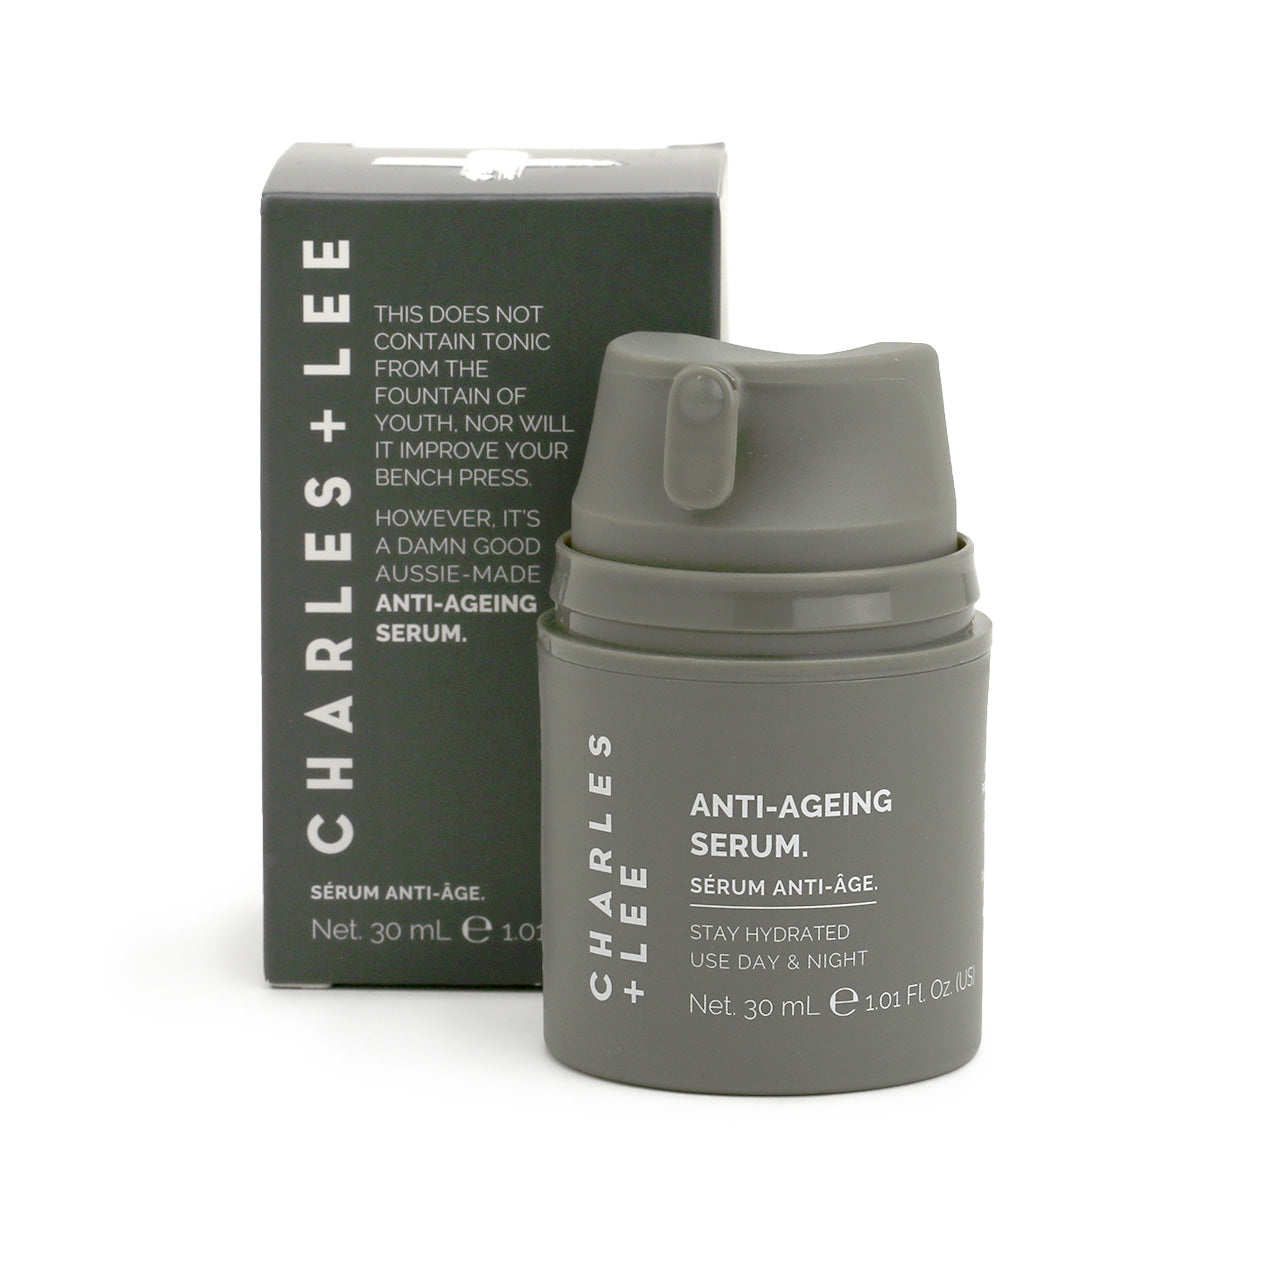 Charles & Lee Anti-Ageing Serum 30ml in a grey pump pack with a lid.